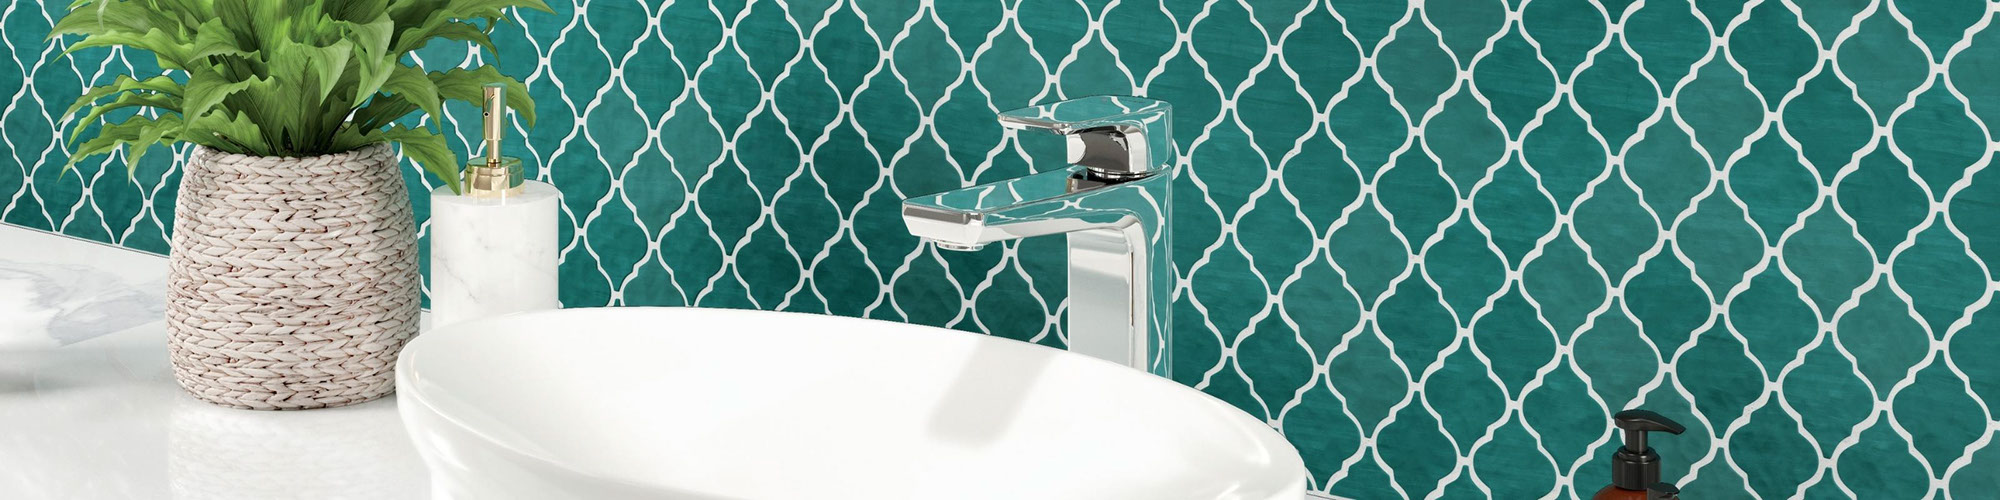 Bathroom vanity with teal arabesque mosaic backsplash, vessel sink on white porcelain slab countertop, silver polish faucet, small plant in wicker basket.